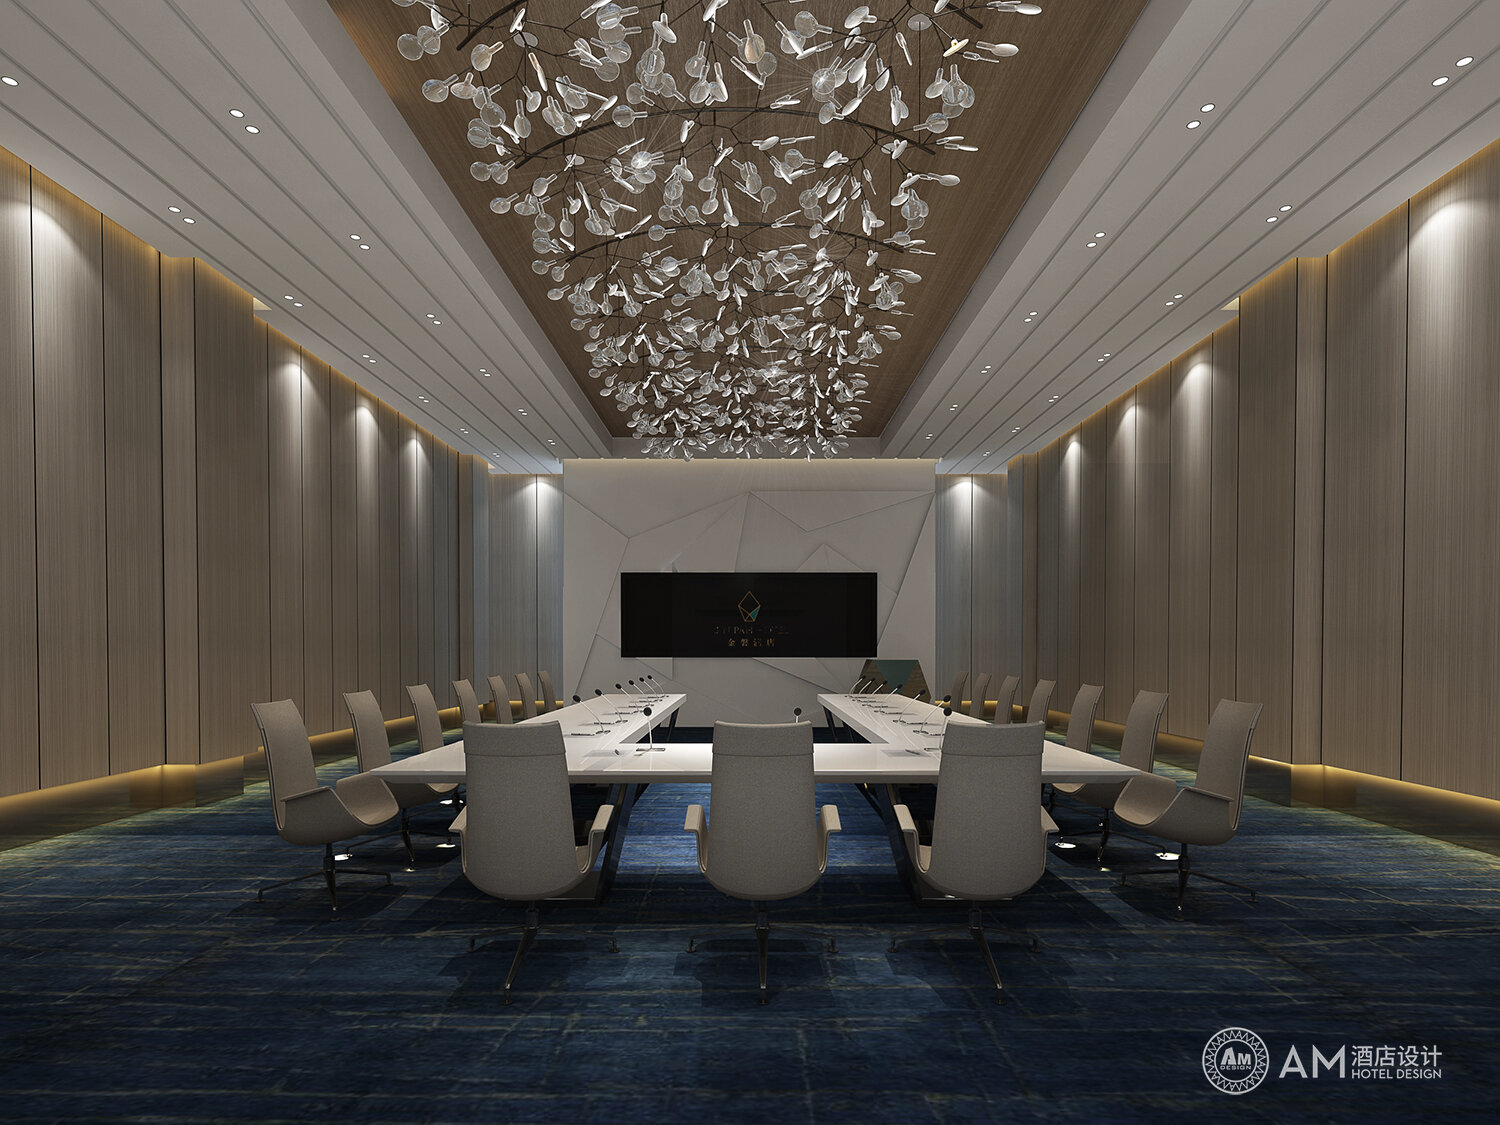 AM DESIGN | Shaanxi Jinpan Hotel Meeting Room Design